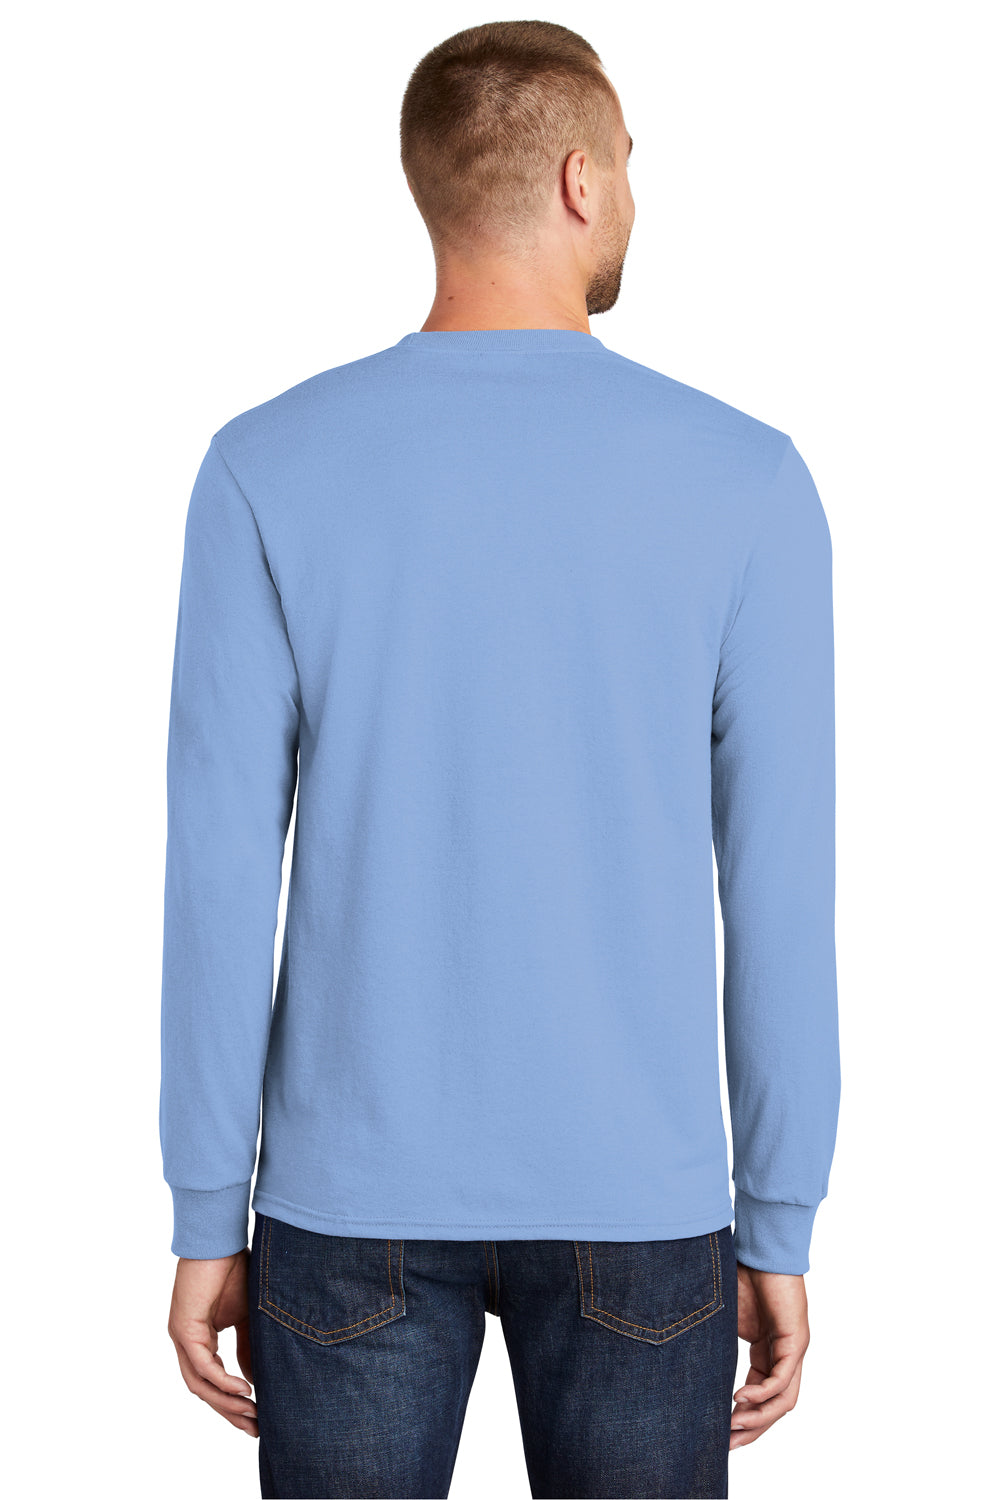 Port & Company PC55LS Mens Core Long Sleeve Crewneck T-Shirt Light Blue Back